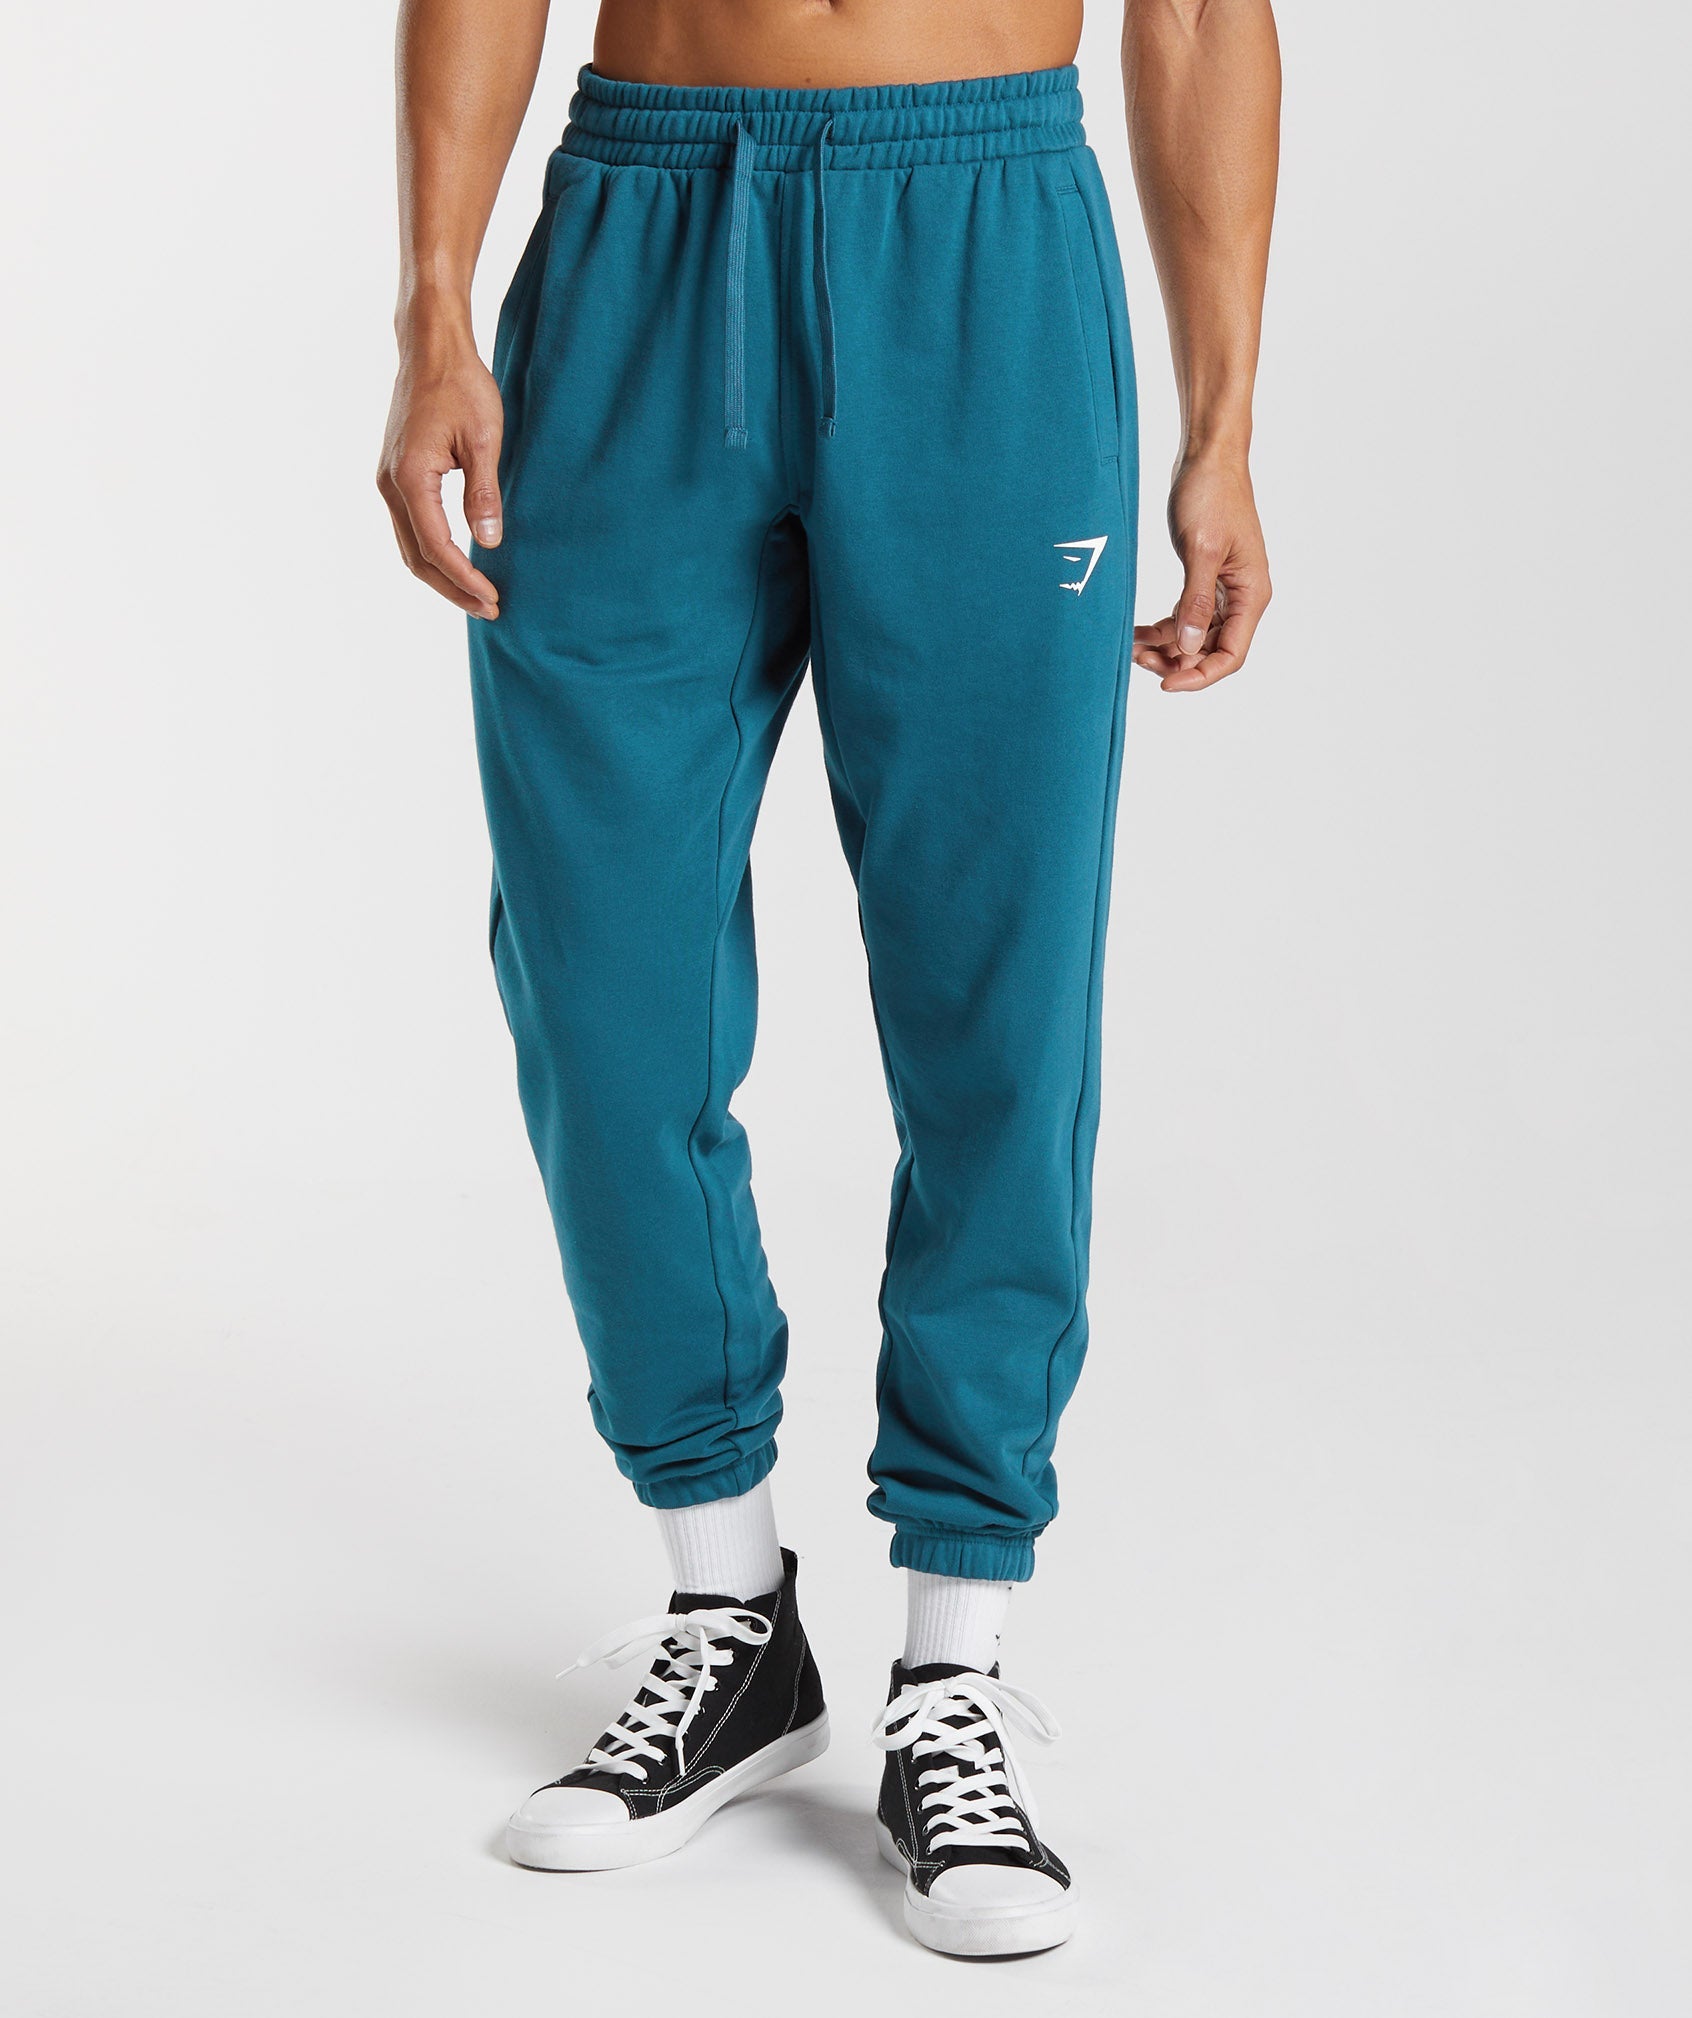 Aayomet Work Pants For Men Men's Sweatpants, EcoSmart Sweatpants for Men,  Men's Lounge Pants with Cinched Cuffs,Beige 3XL